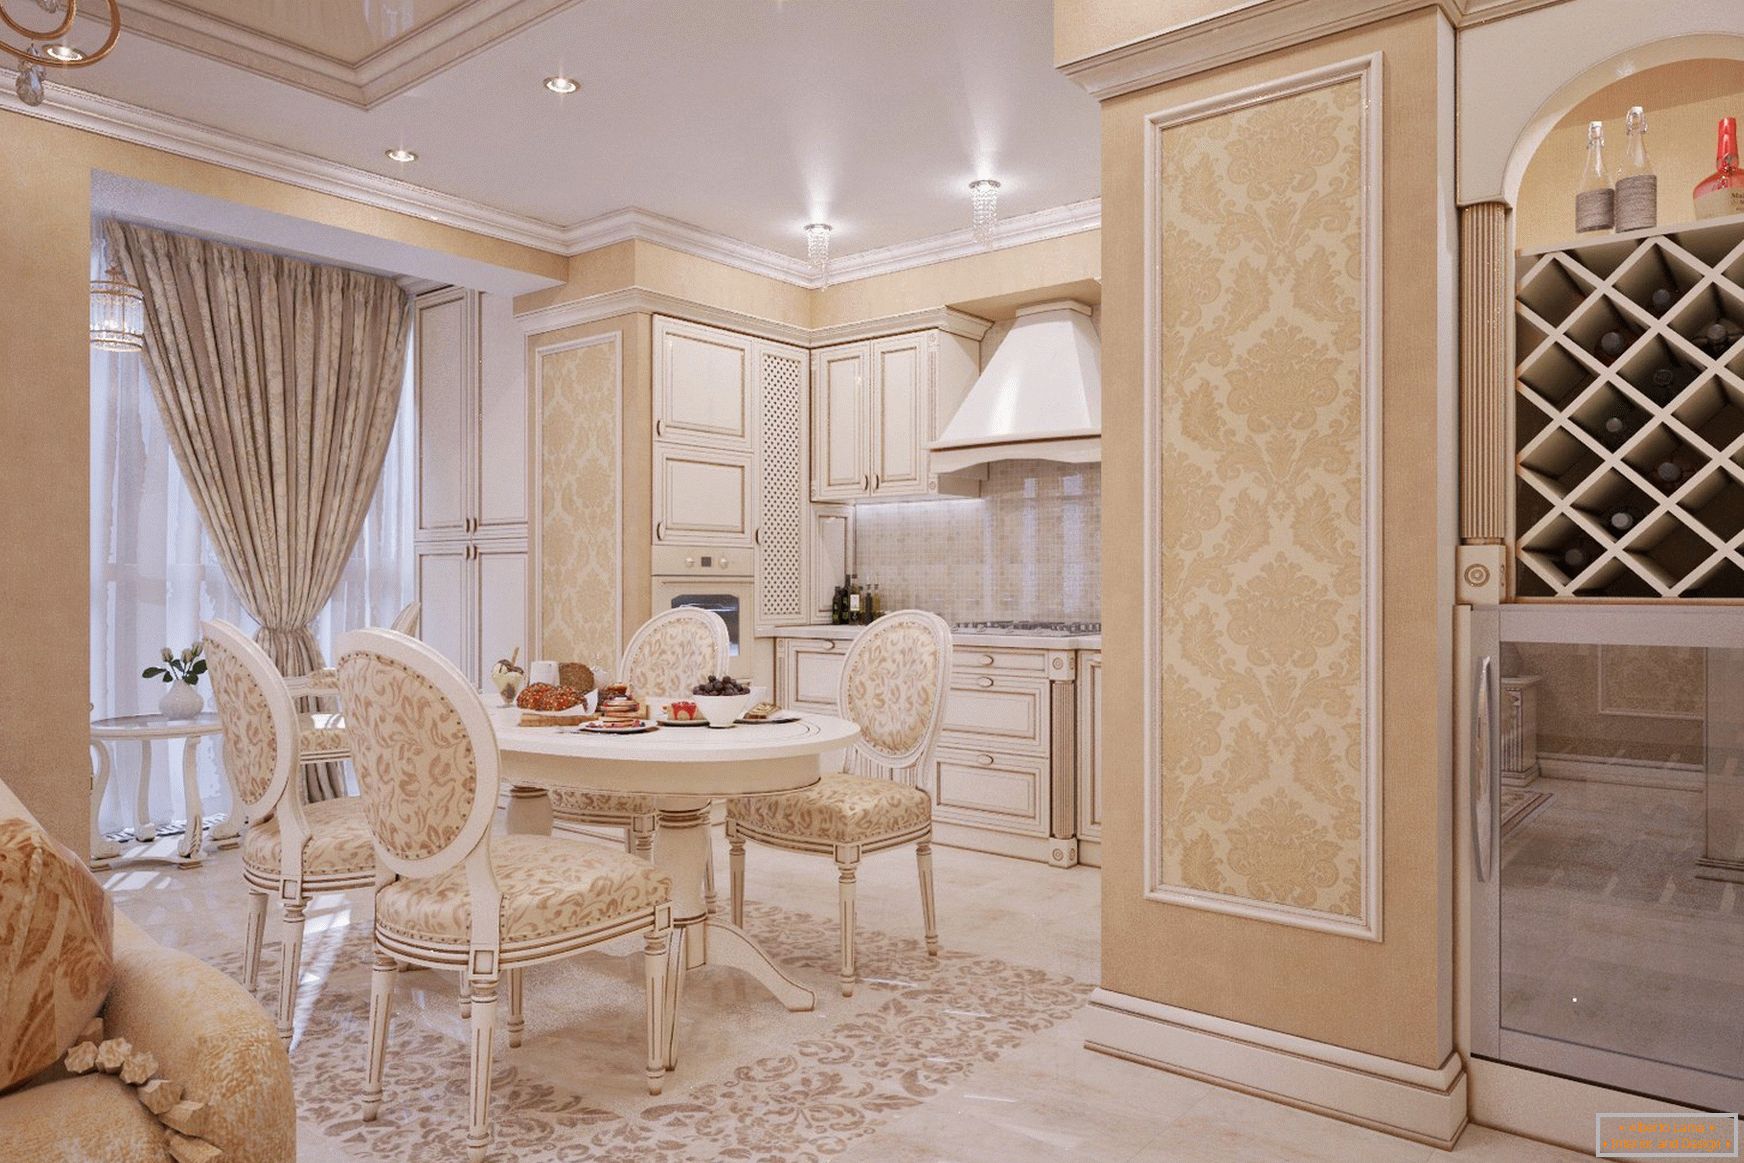 Studio kuchenne w stylu klasycznym